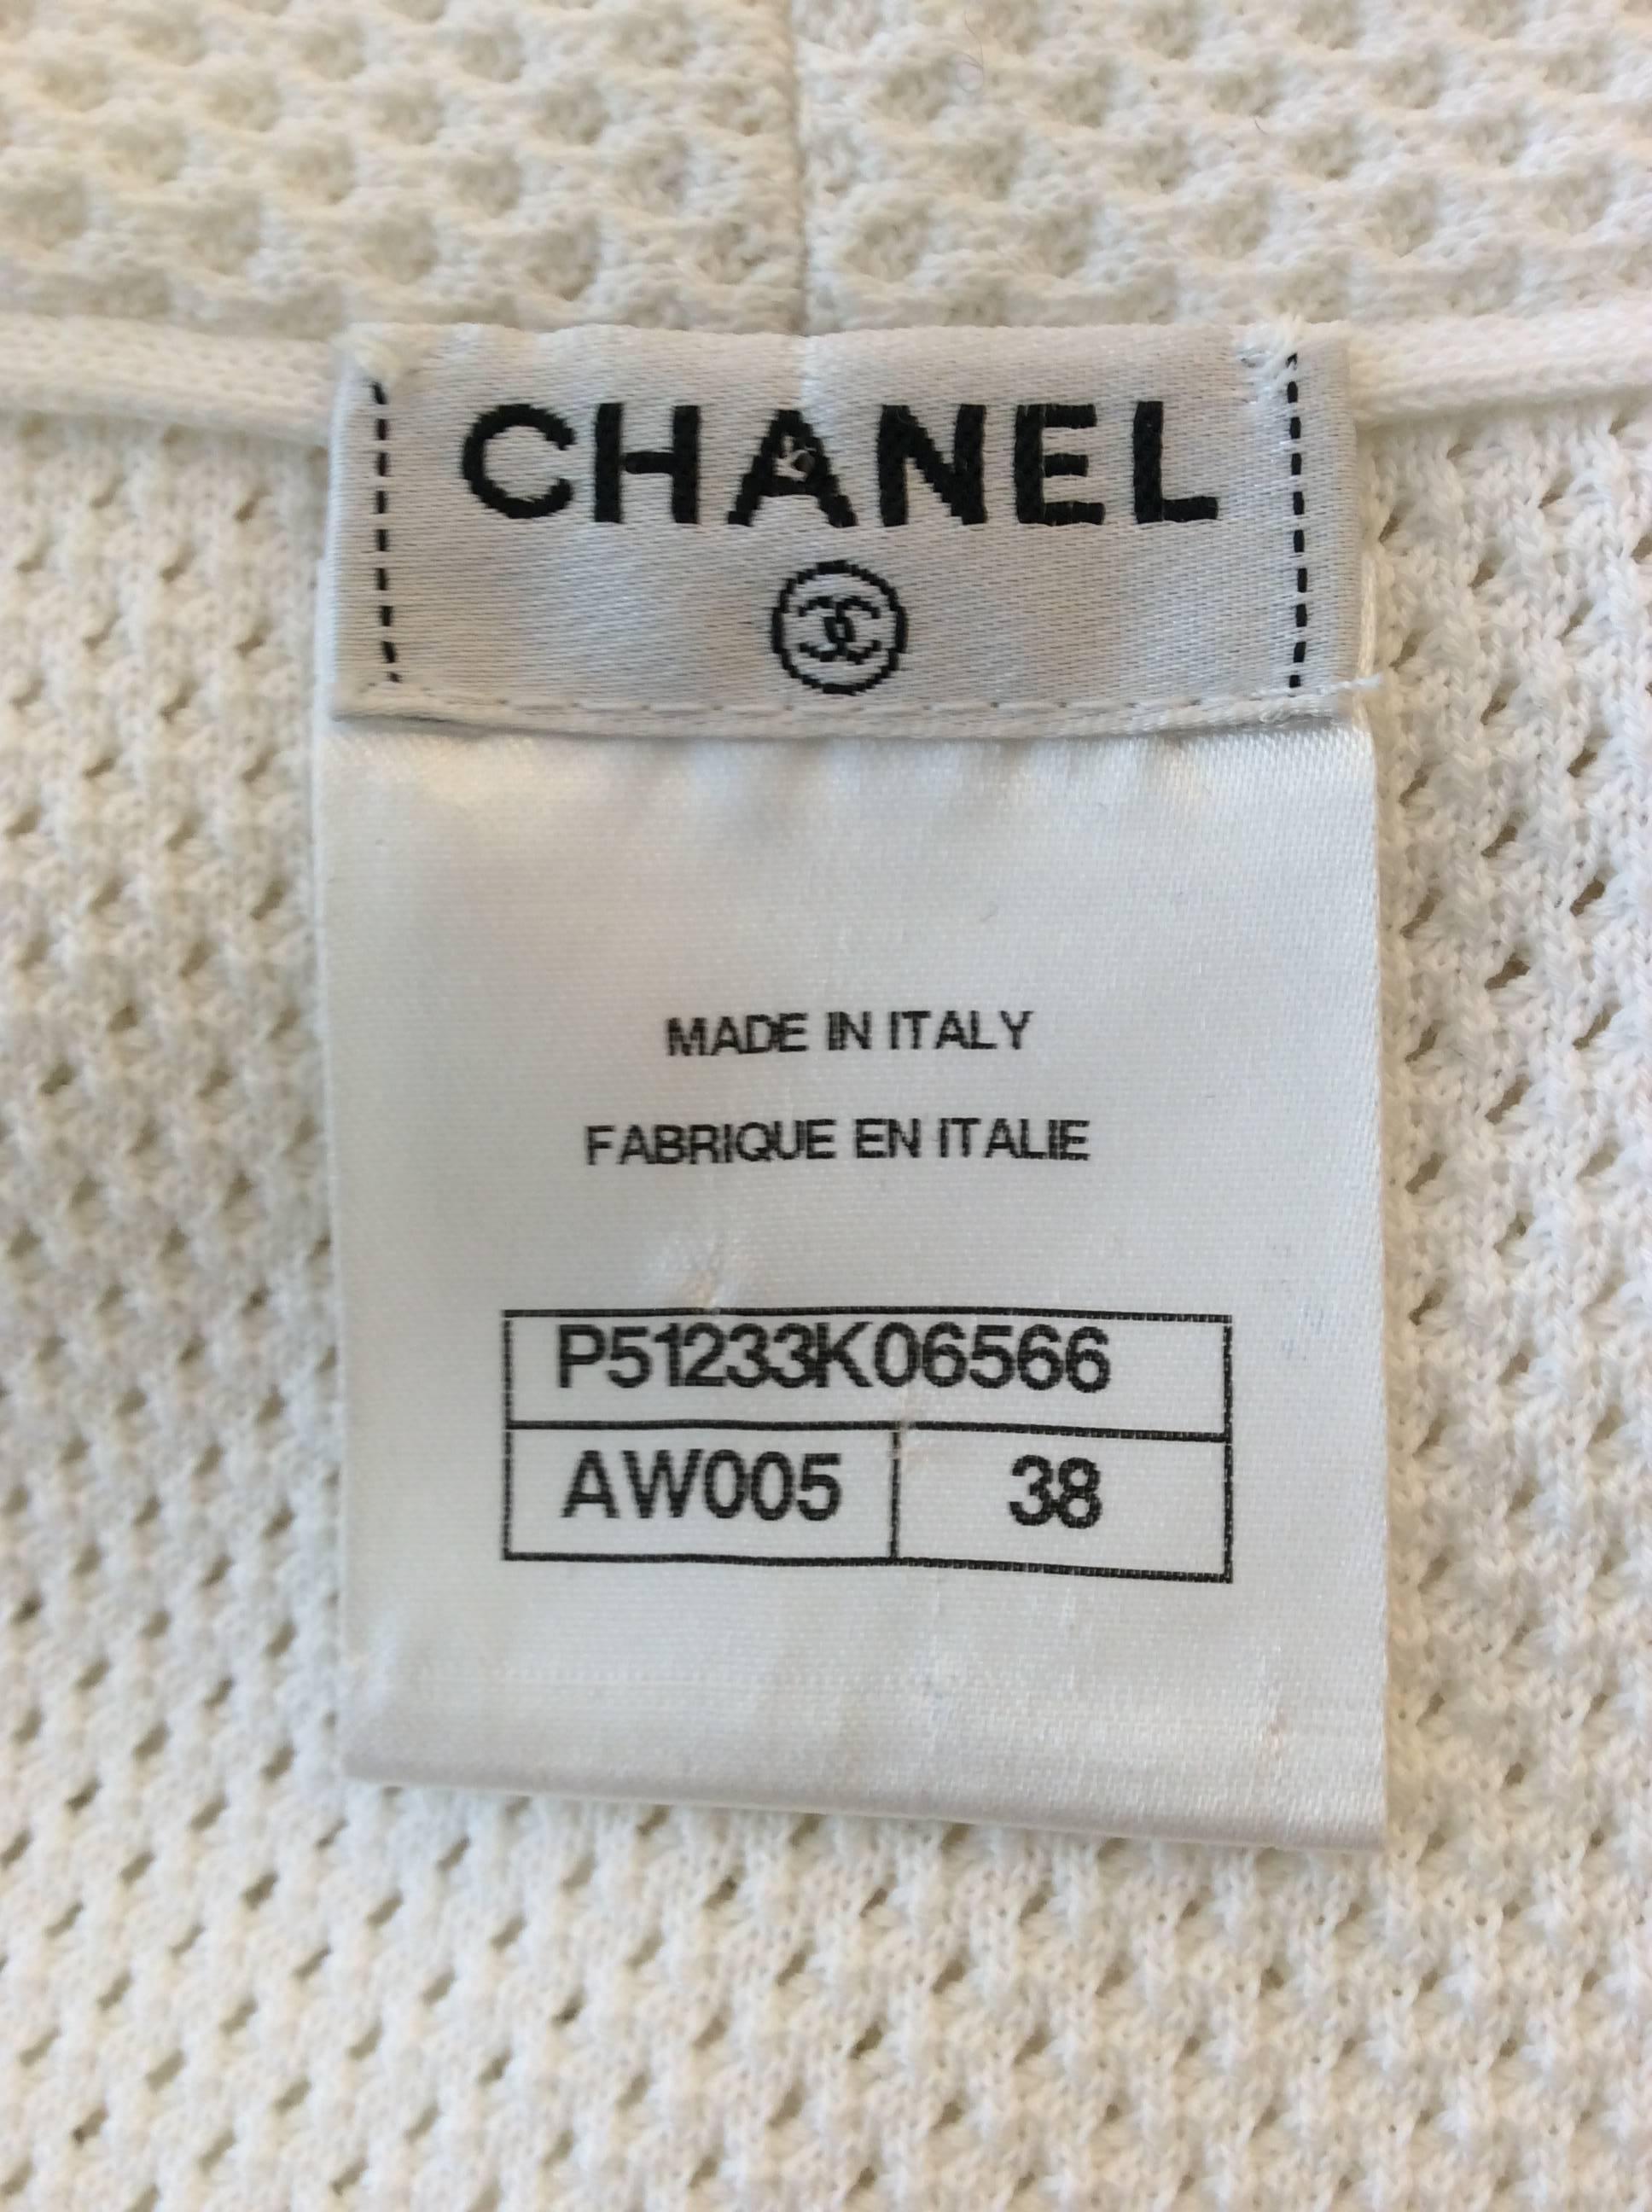 Chanel White Cotton Pique Dress Size 6 2